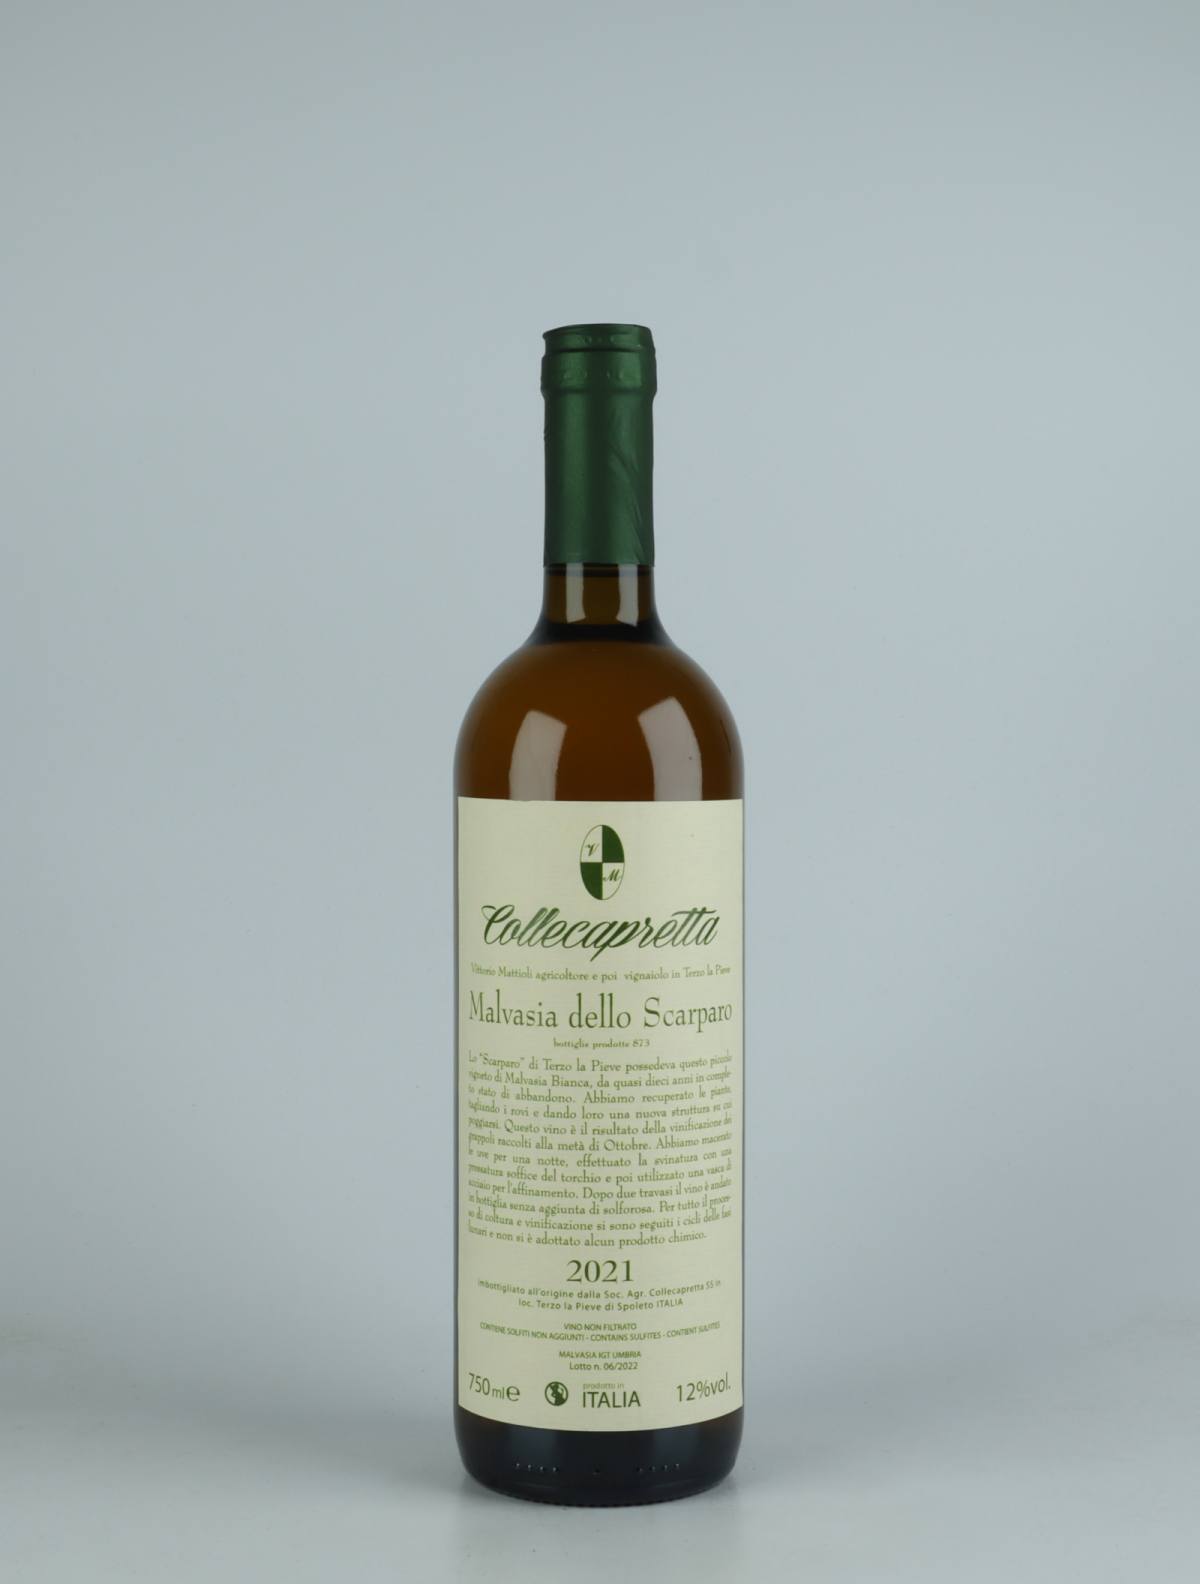 En flaske 2021 Malvasia dello Scarparo Orange vin fra Collecapretta, Umbrien i Italien